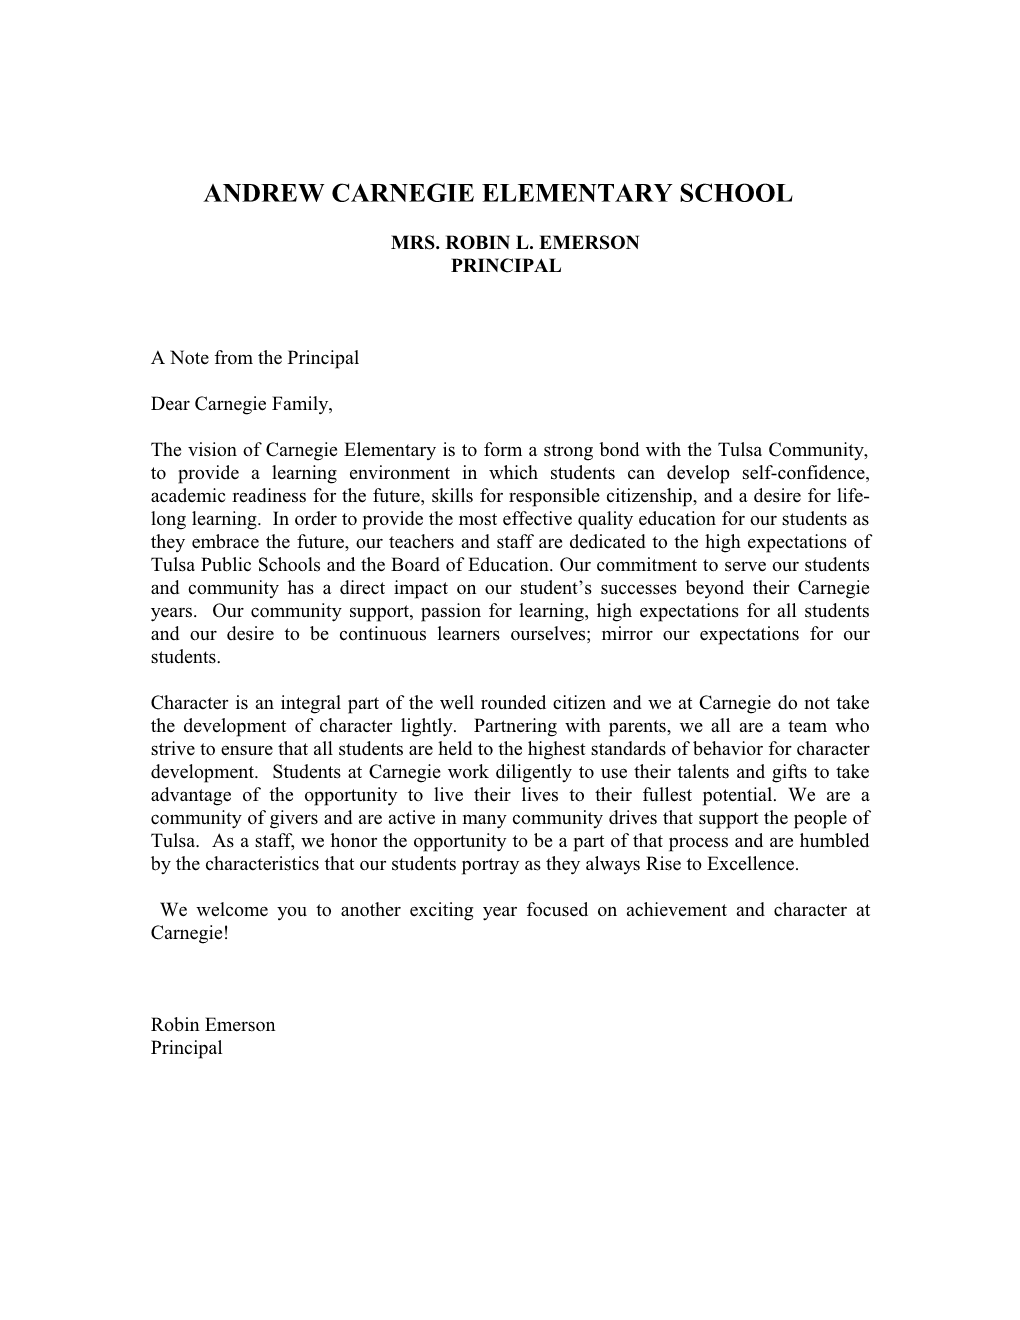 Andrew Carnegie Elementary School